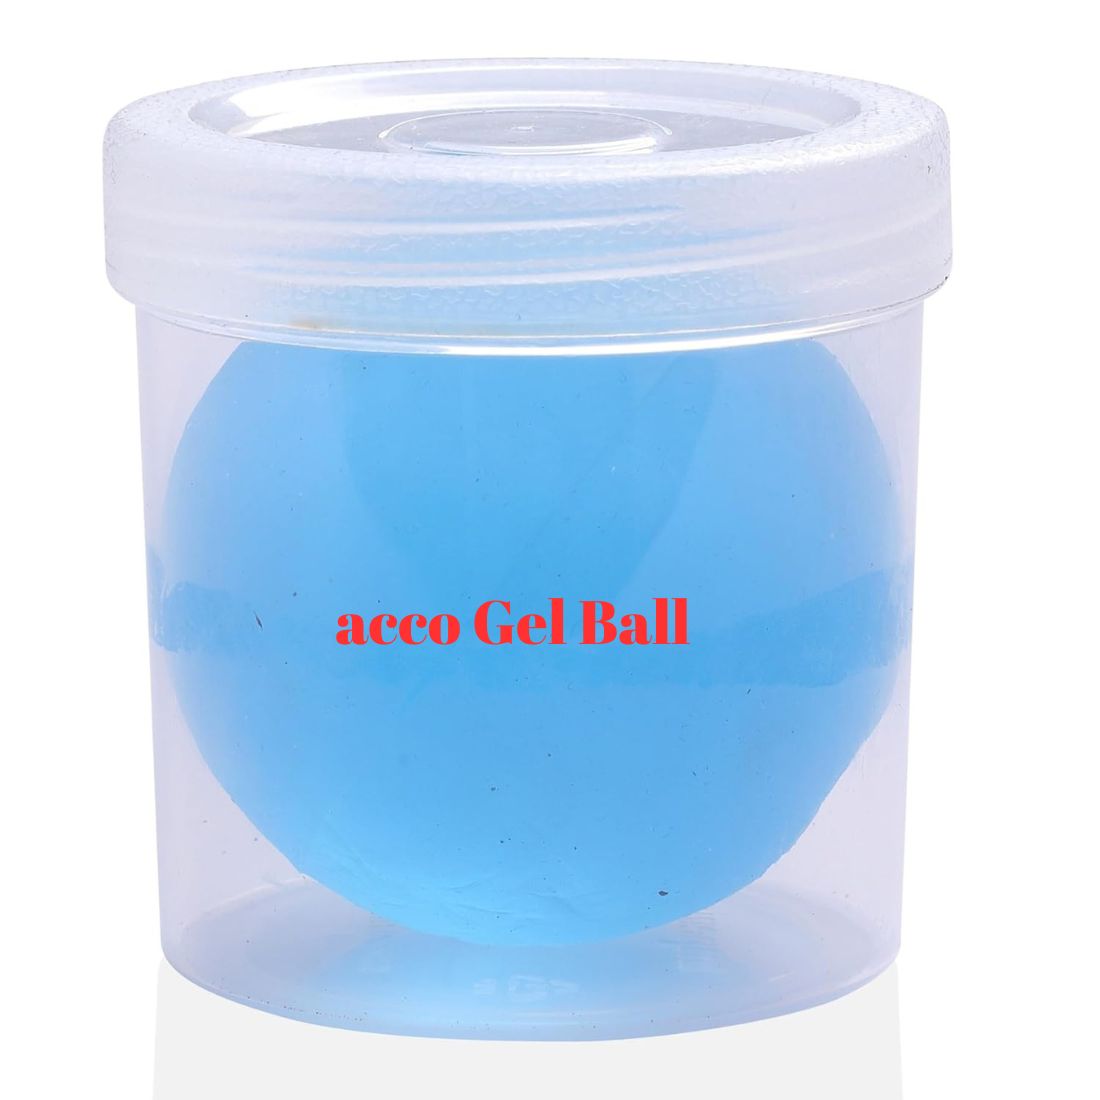 acco Hand exercise Ball - Gel Ball